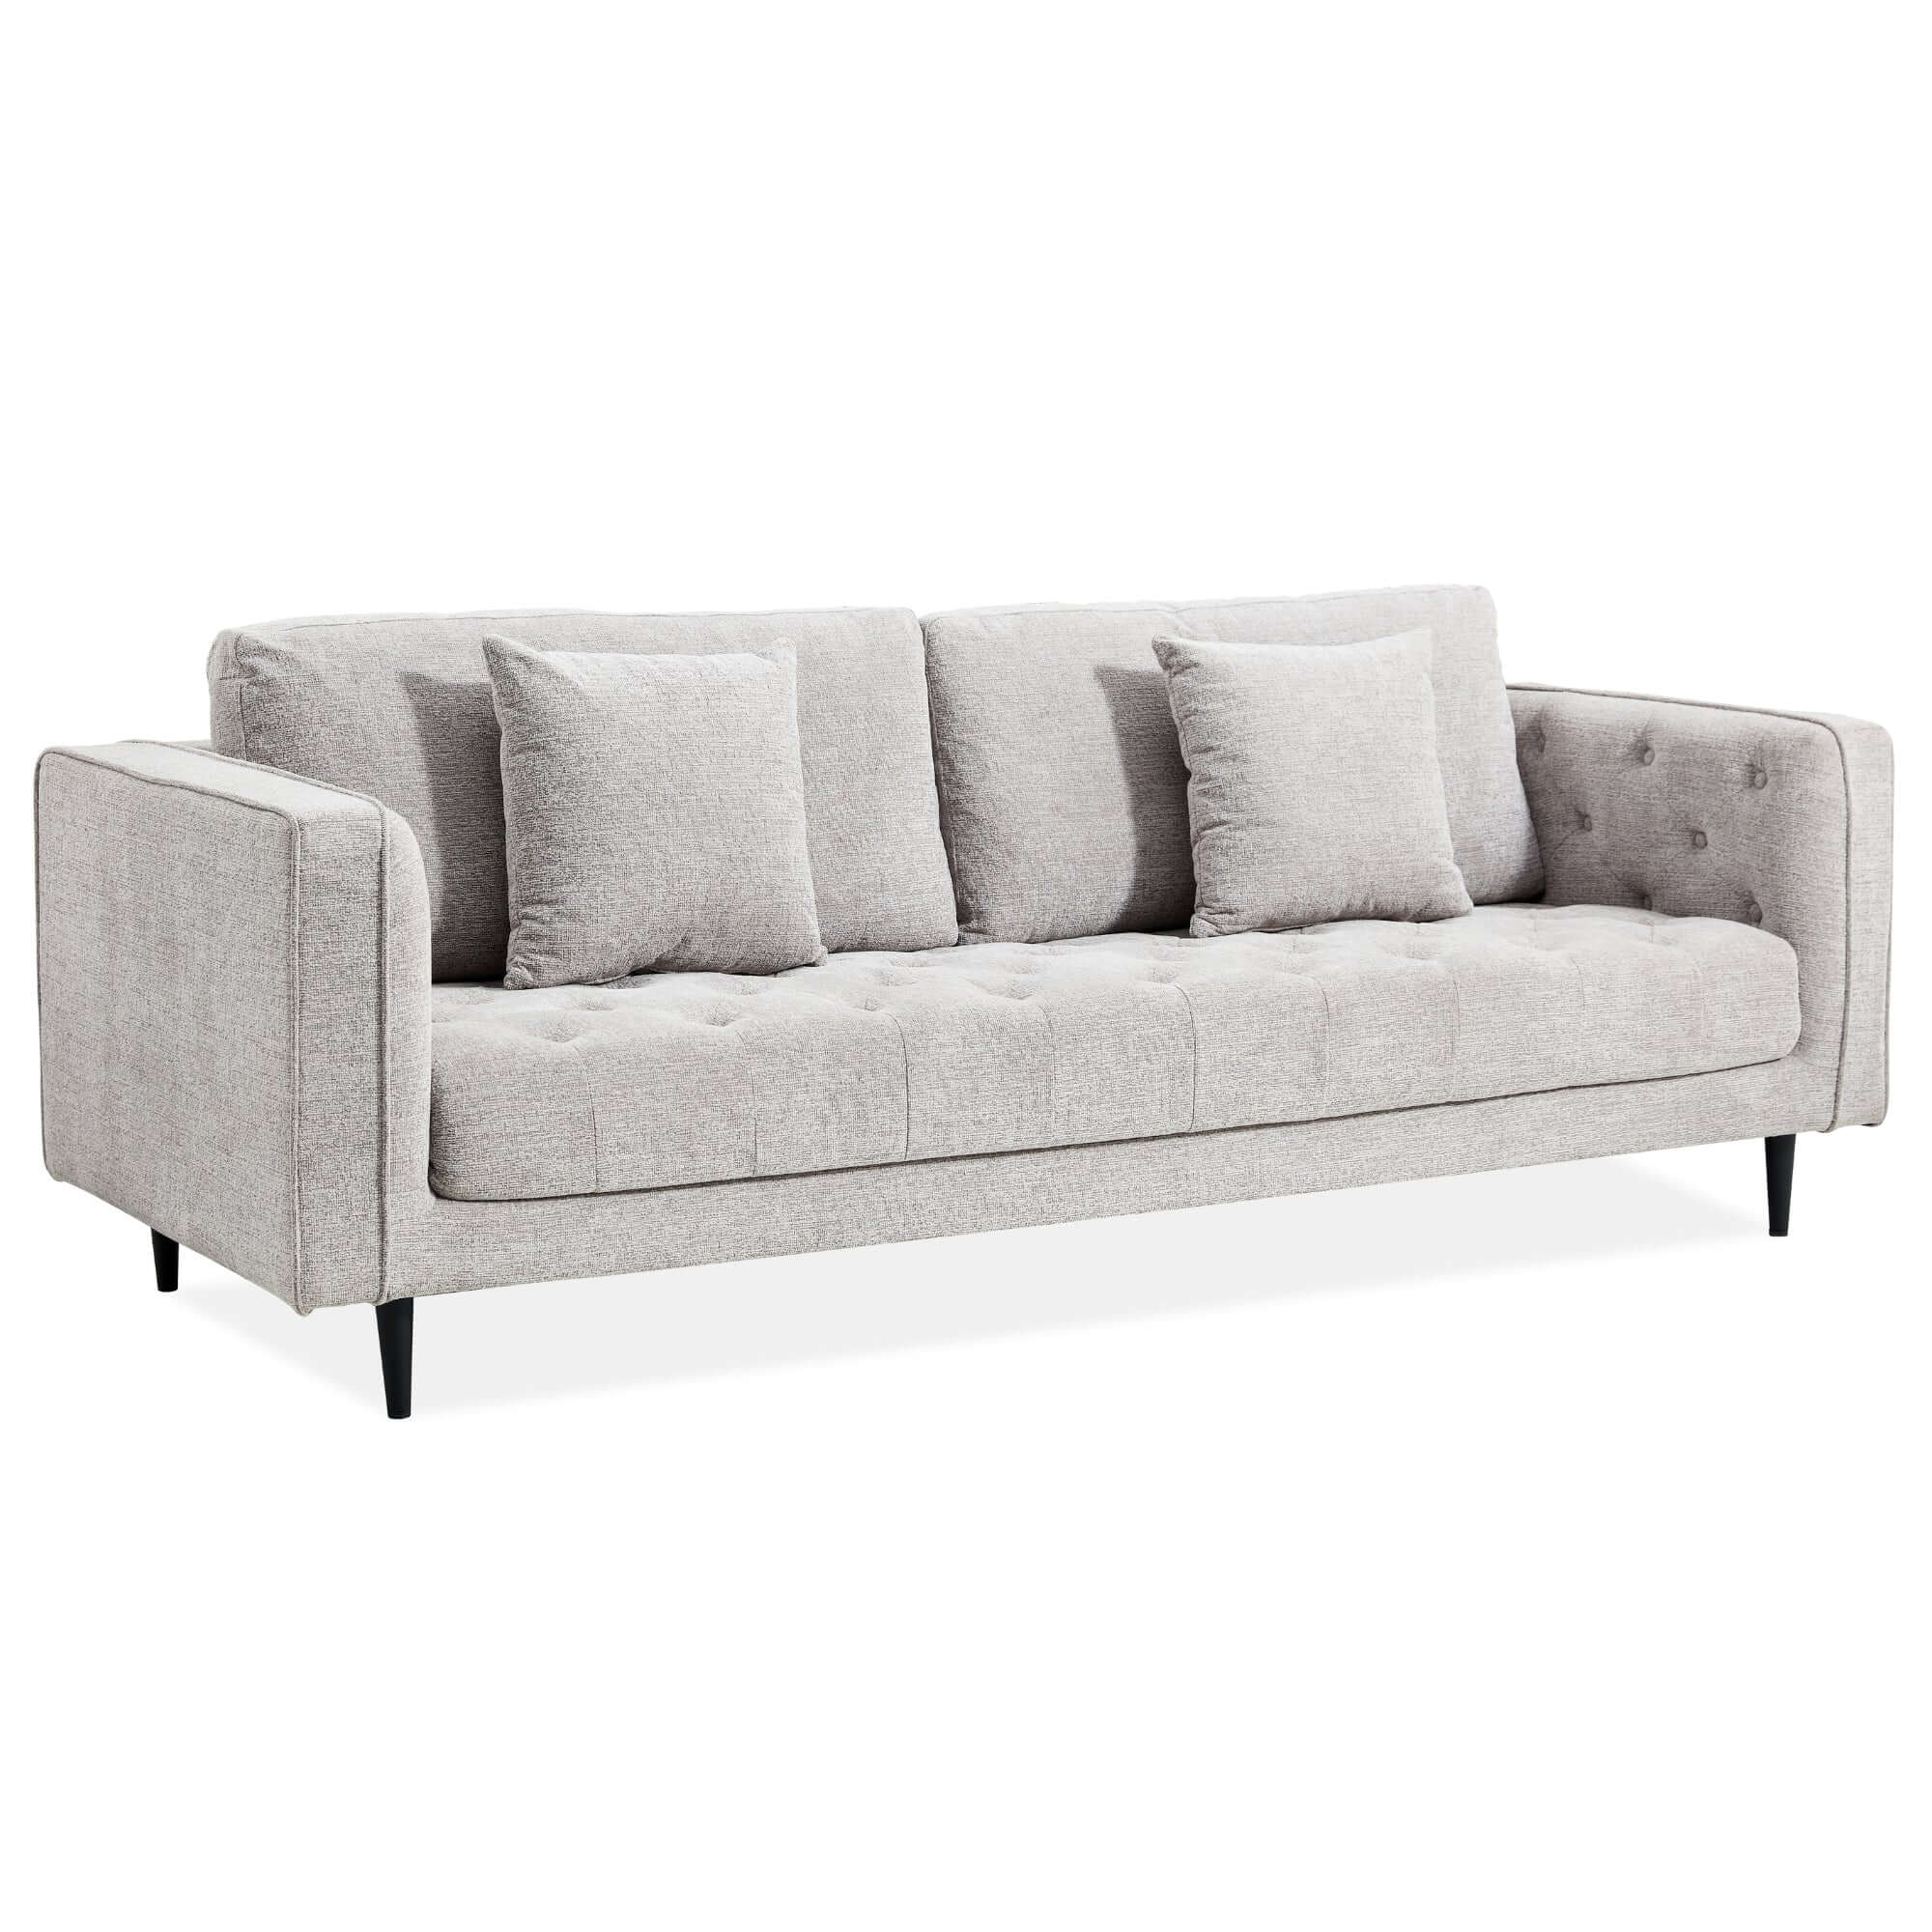 Jolie XL 3-Seater Sofa in Quartz - French Style Comfort-Upinteriors